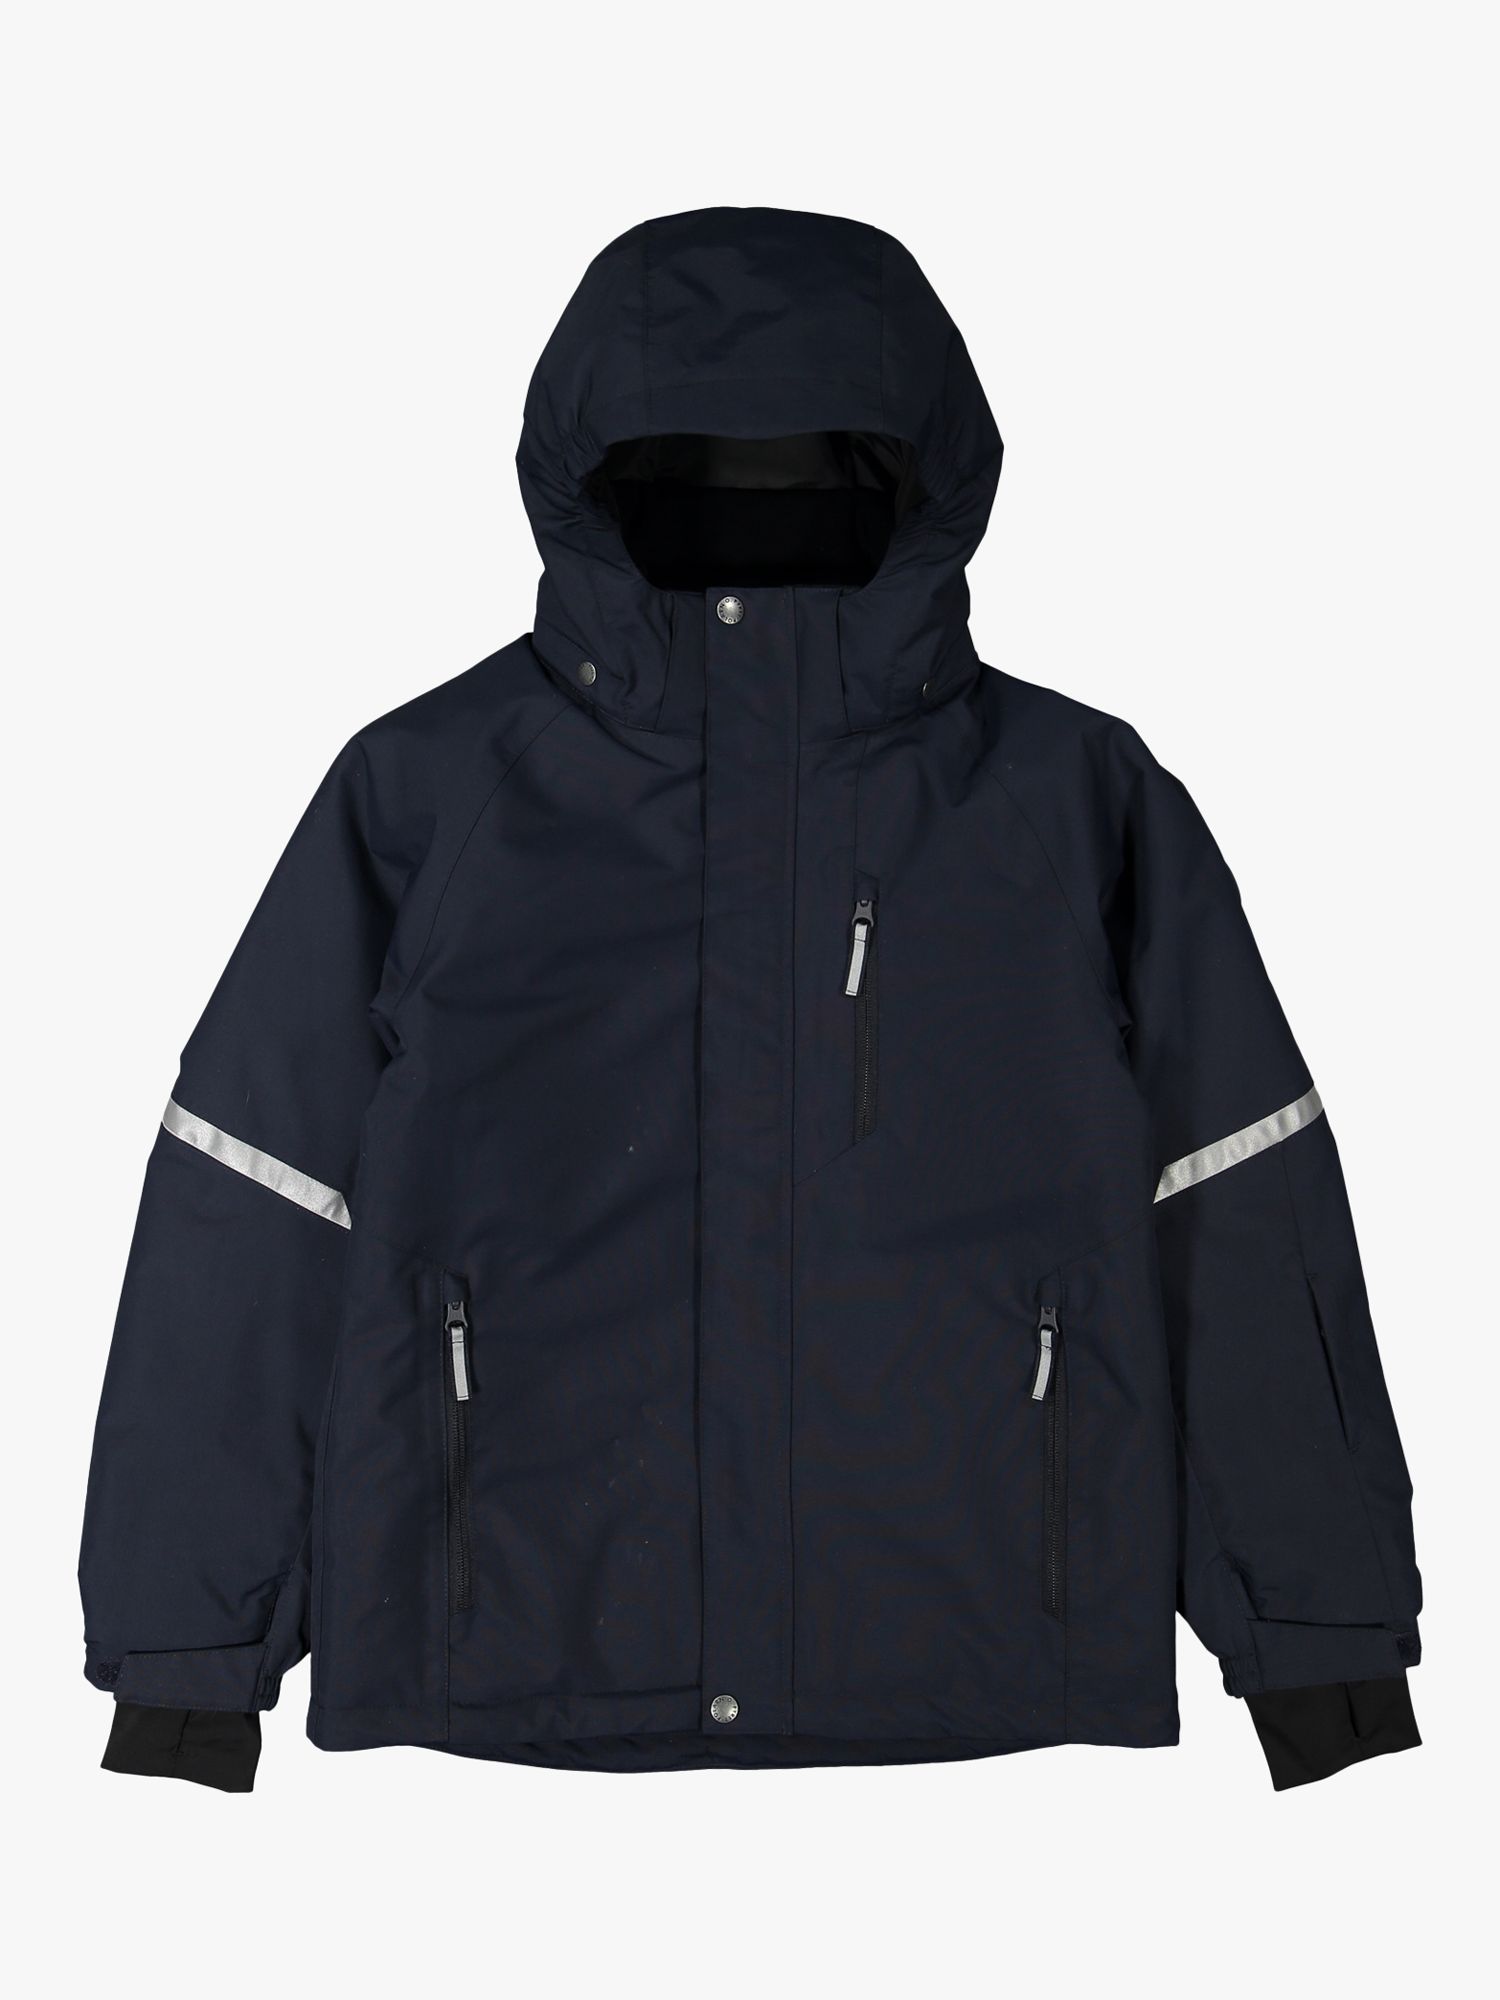 Avia Women's Cold Weather Active Jacket, Sizes XS-XXXL 